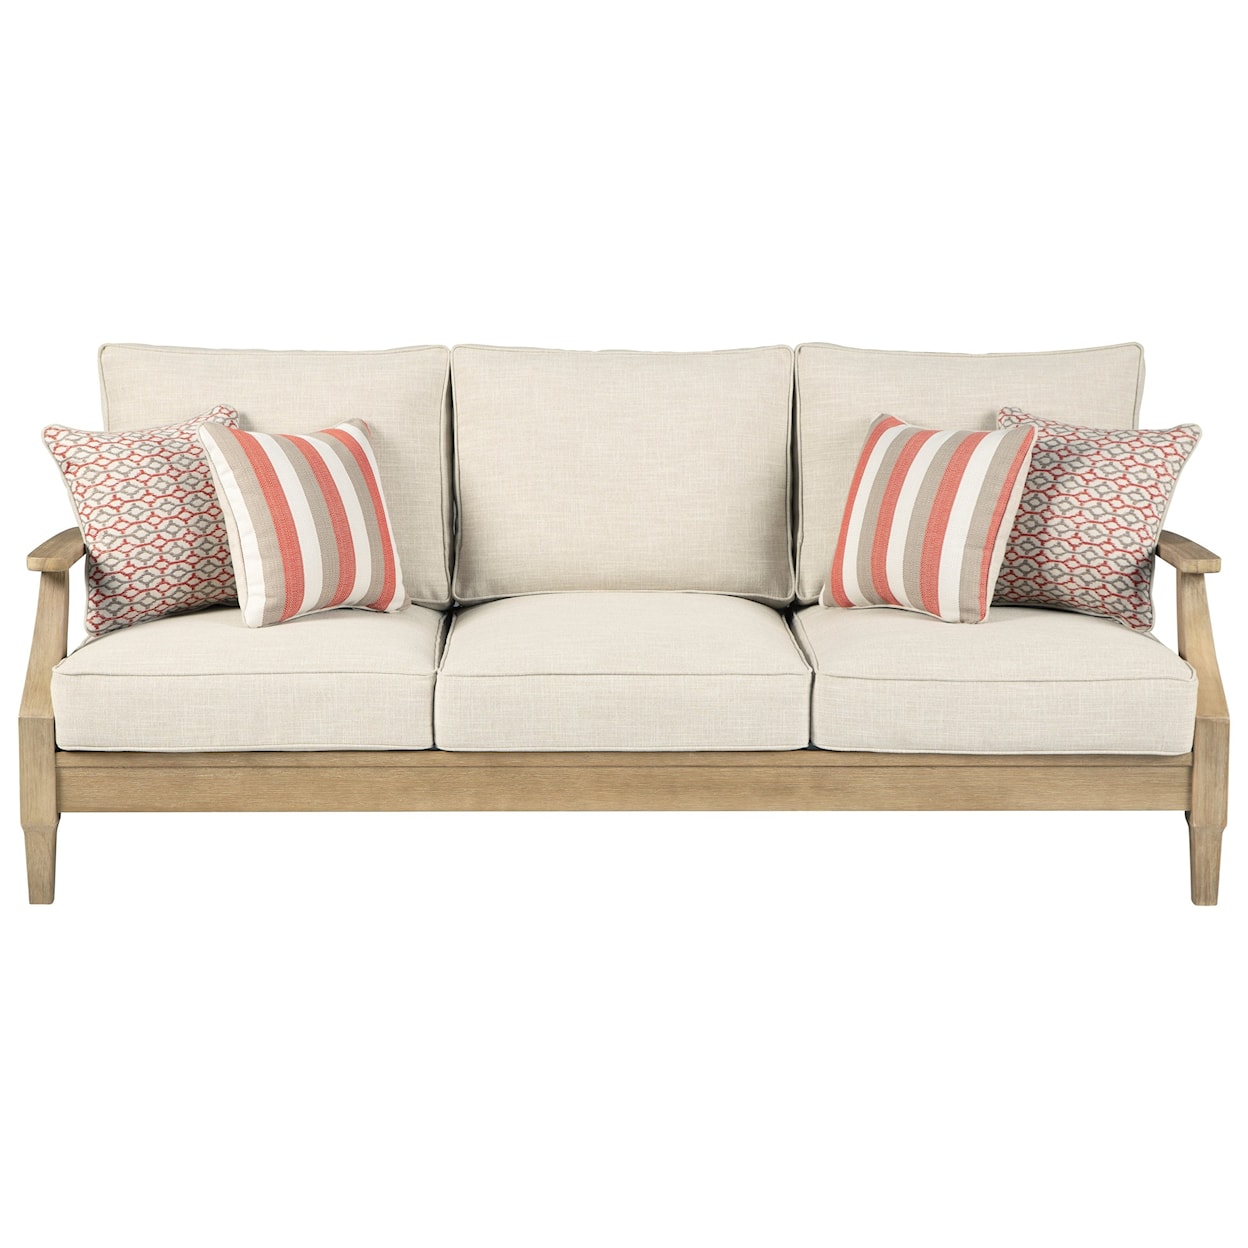 Ashley Furniture Signature Design Clare View Sofa with Cushion